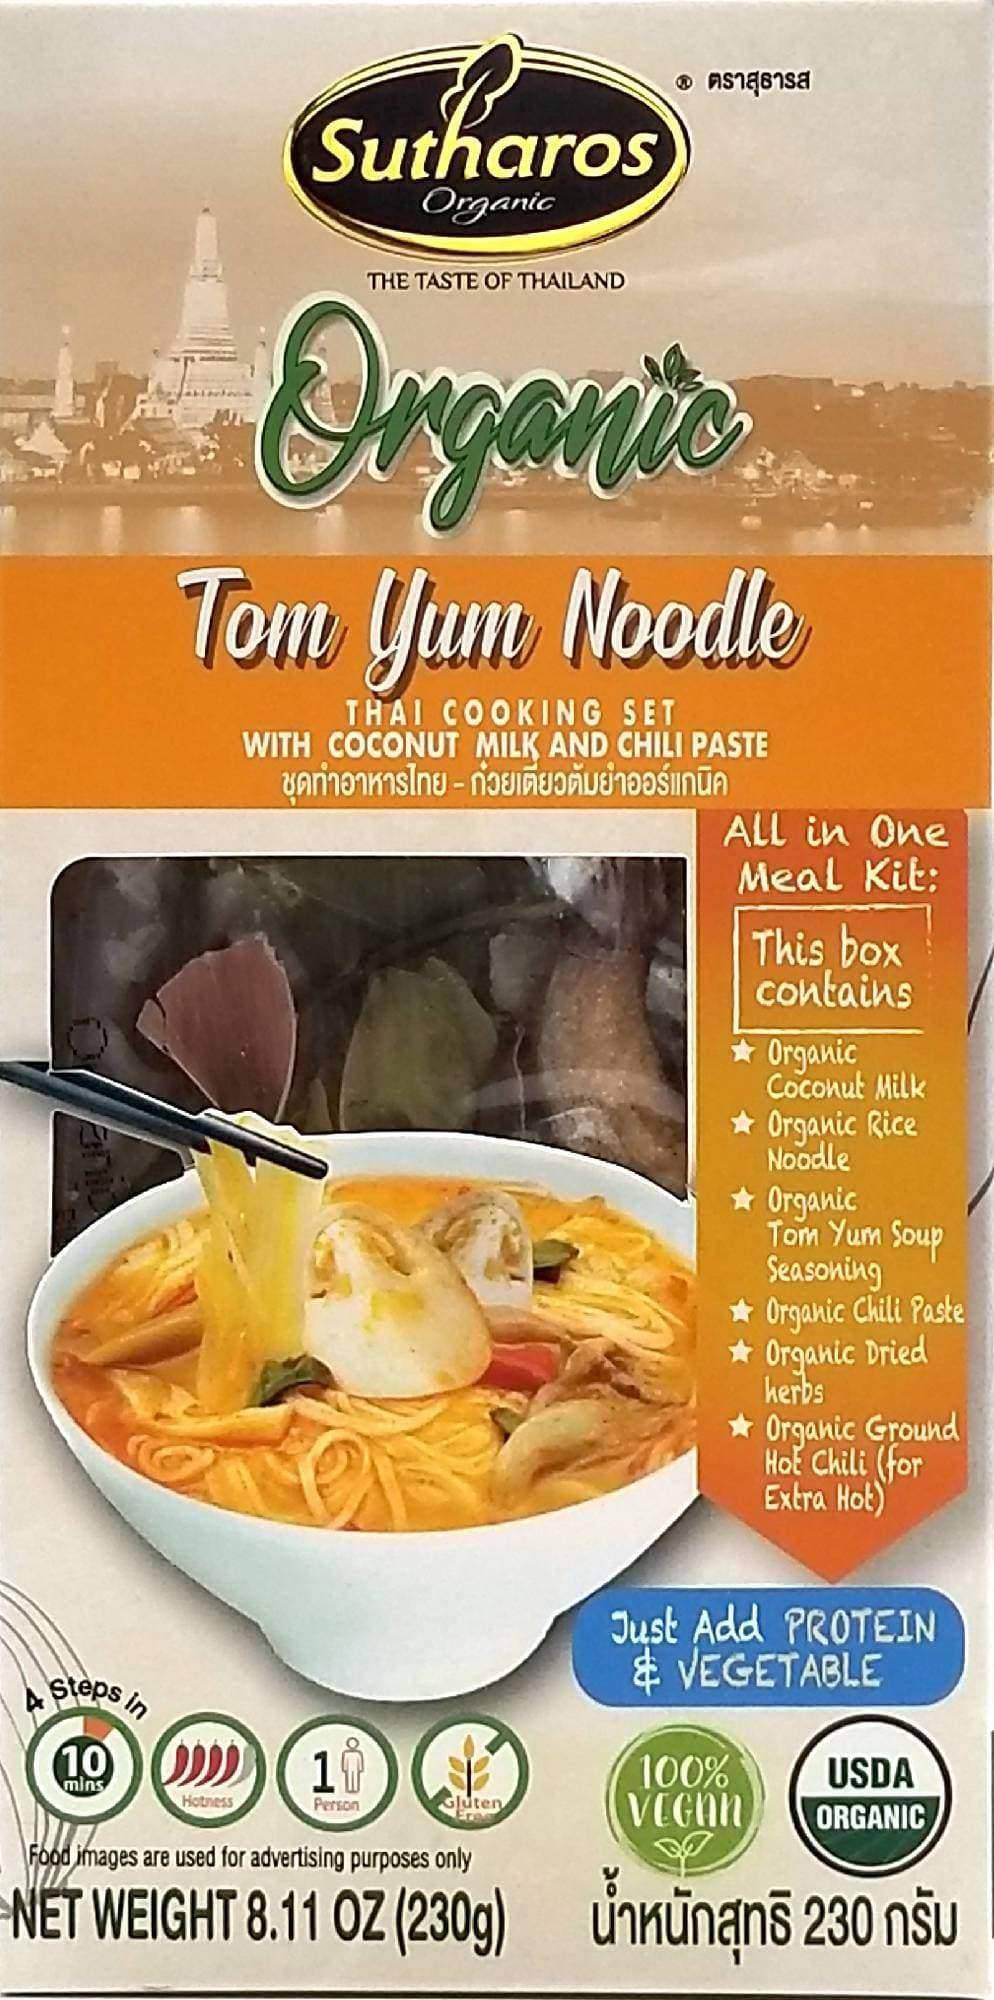 Sutharos Organic Creamy Tom Yum Noodle Meal Kit exclusive at